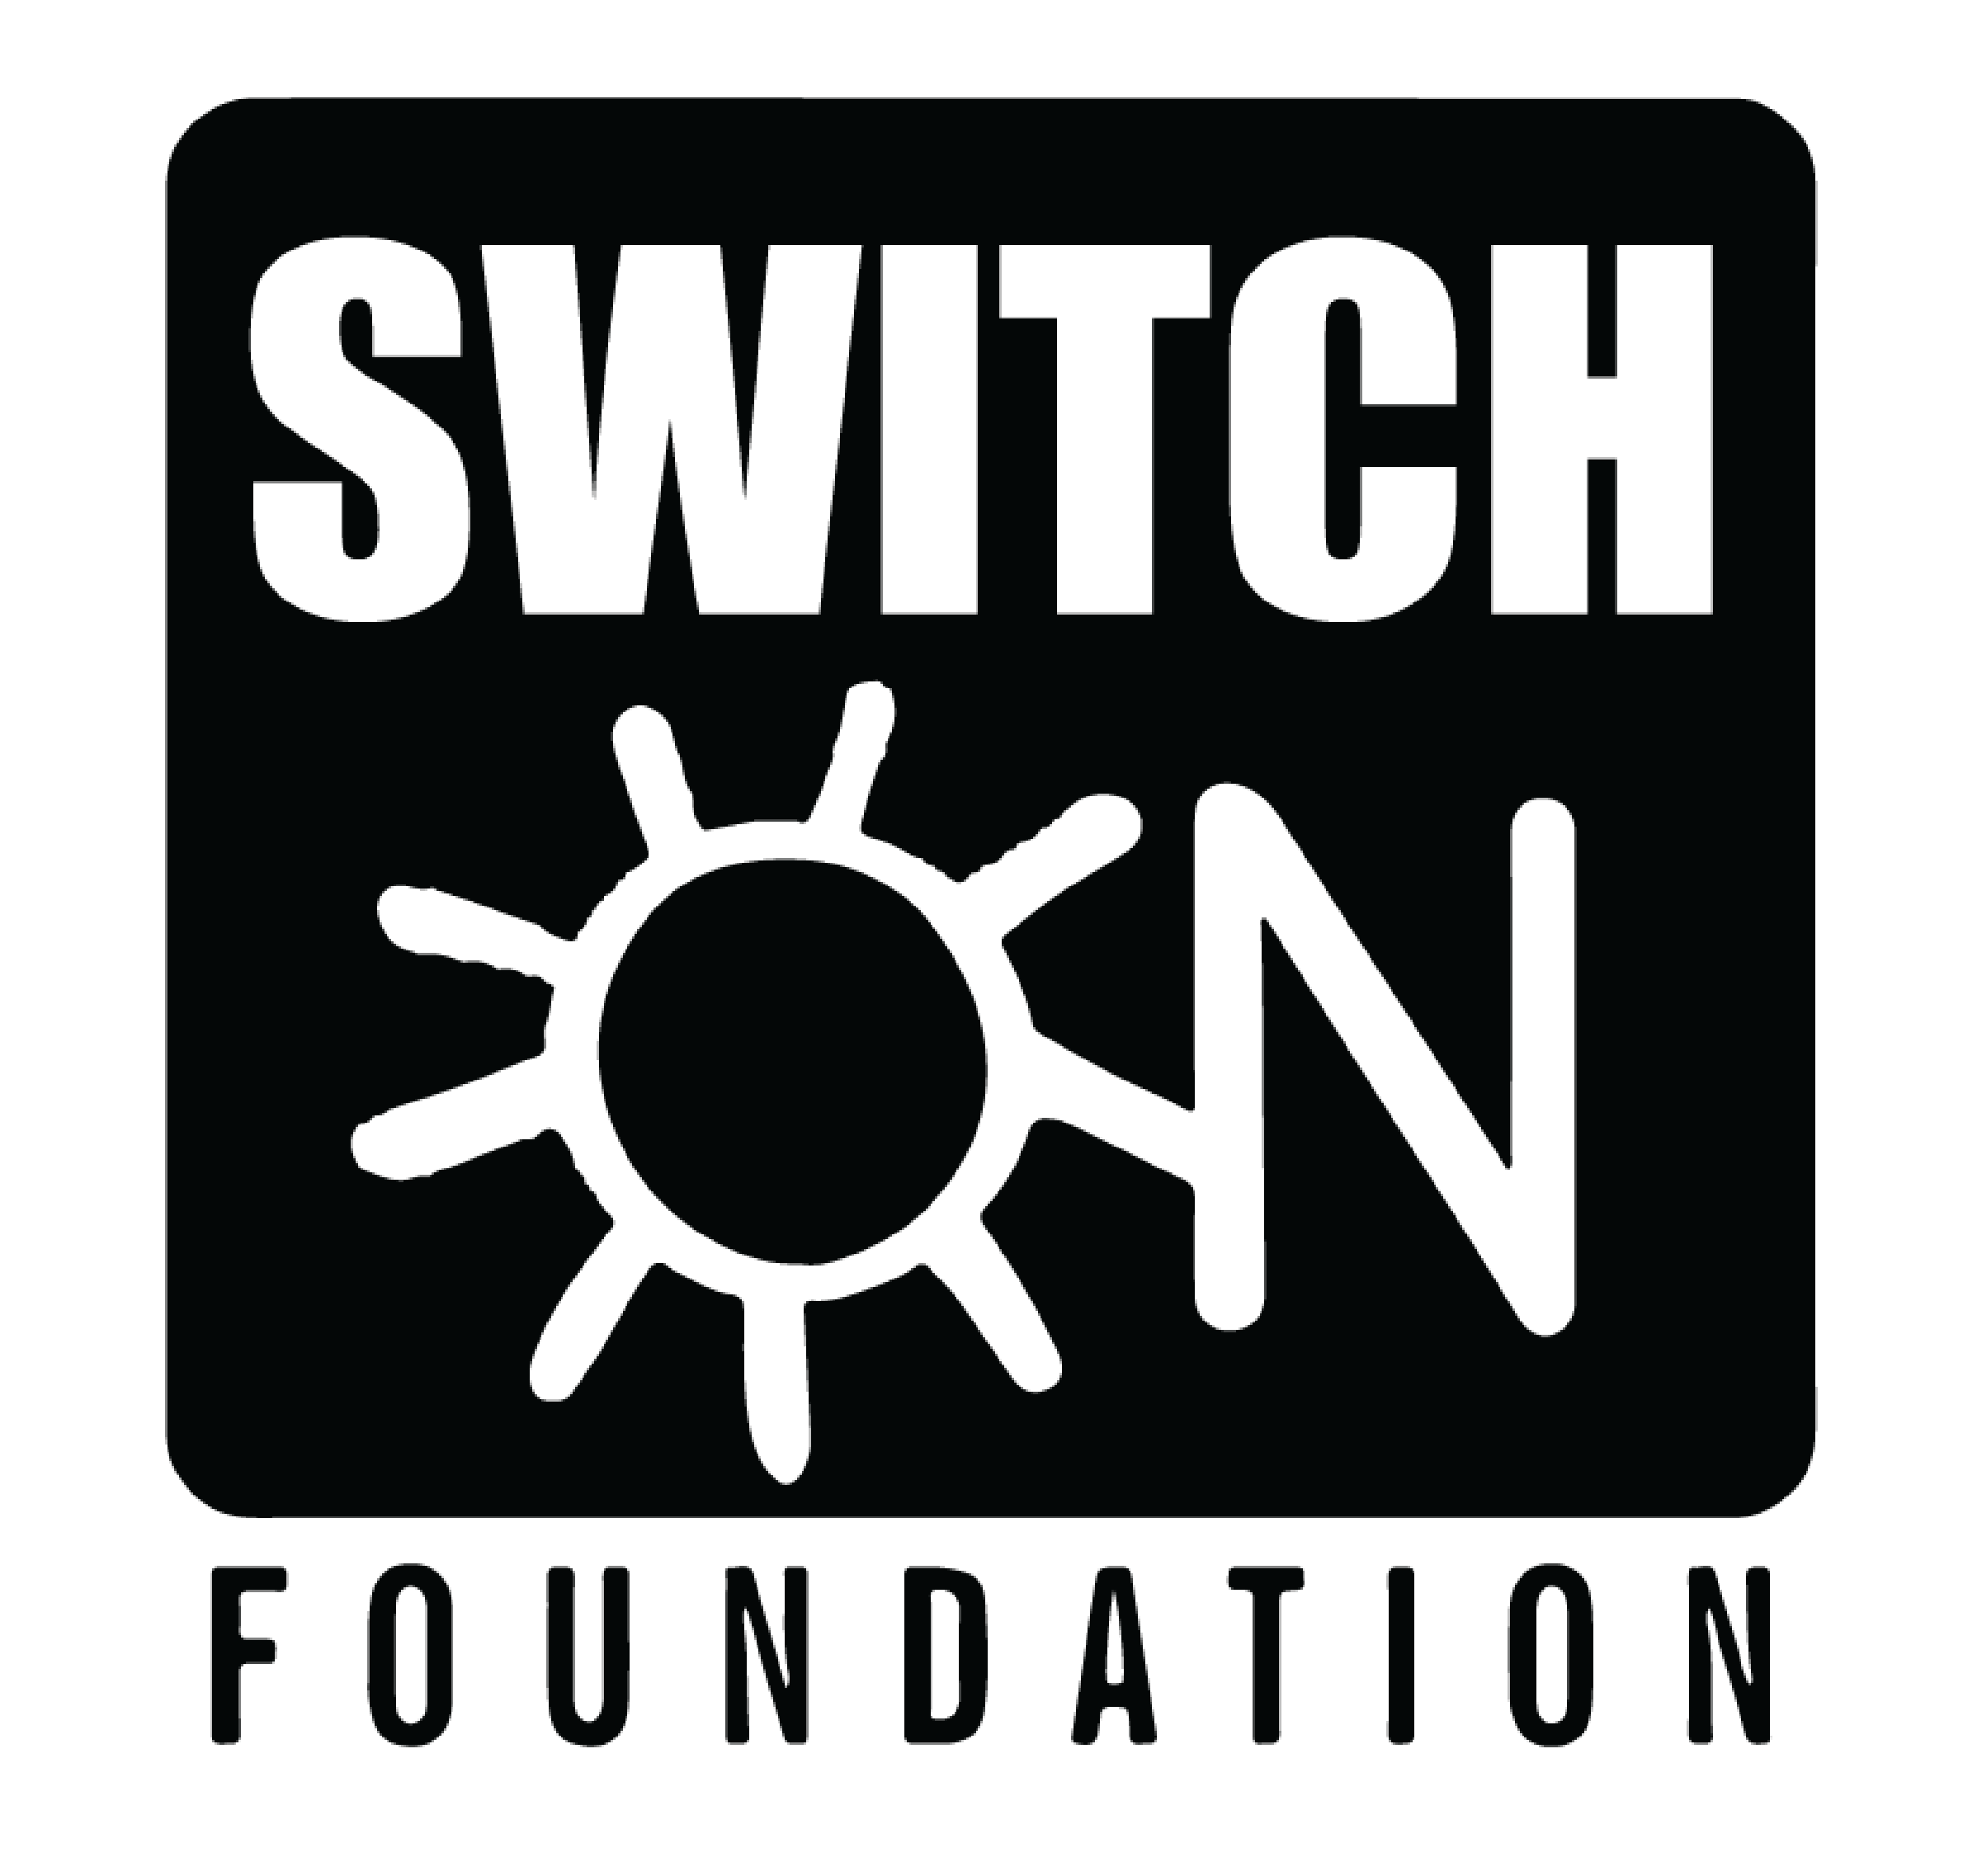 SwitchON Foundation logo (Black)